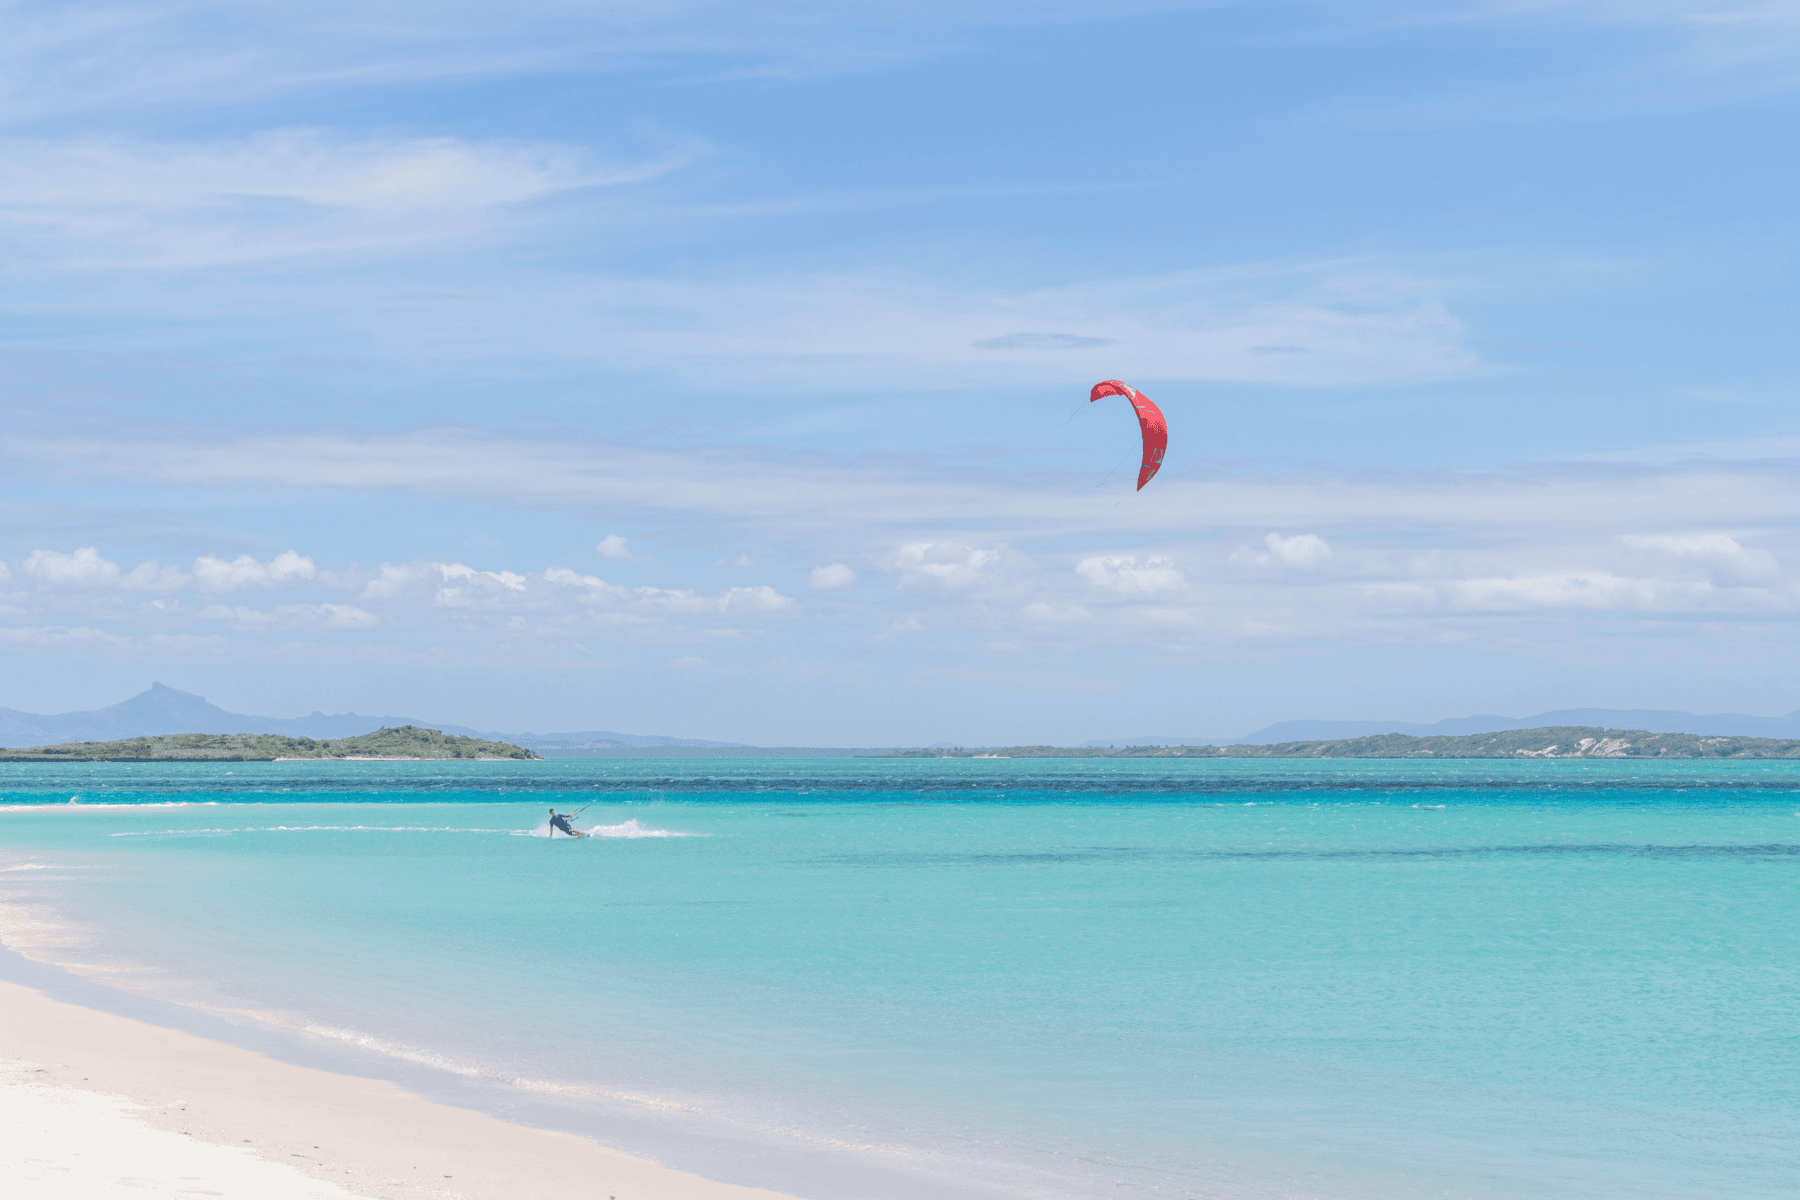 Kiteboarding in aquamarine water at Miavana